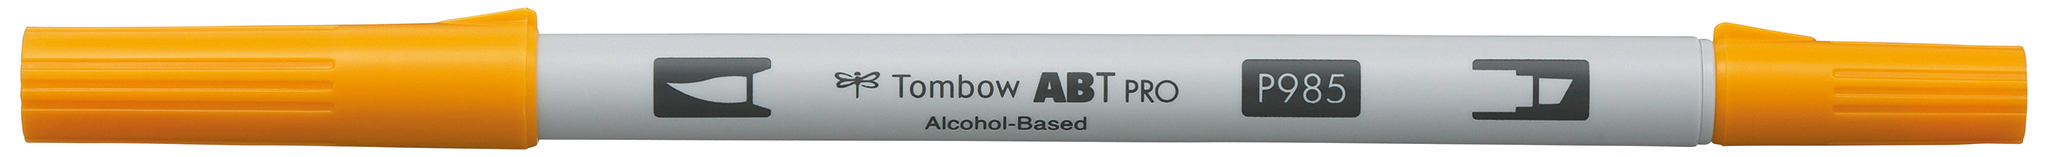 TOMBOW Dual Brush Pen ABT PRO ABTP-985 chrome yellow chrome yellow